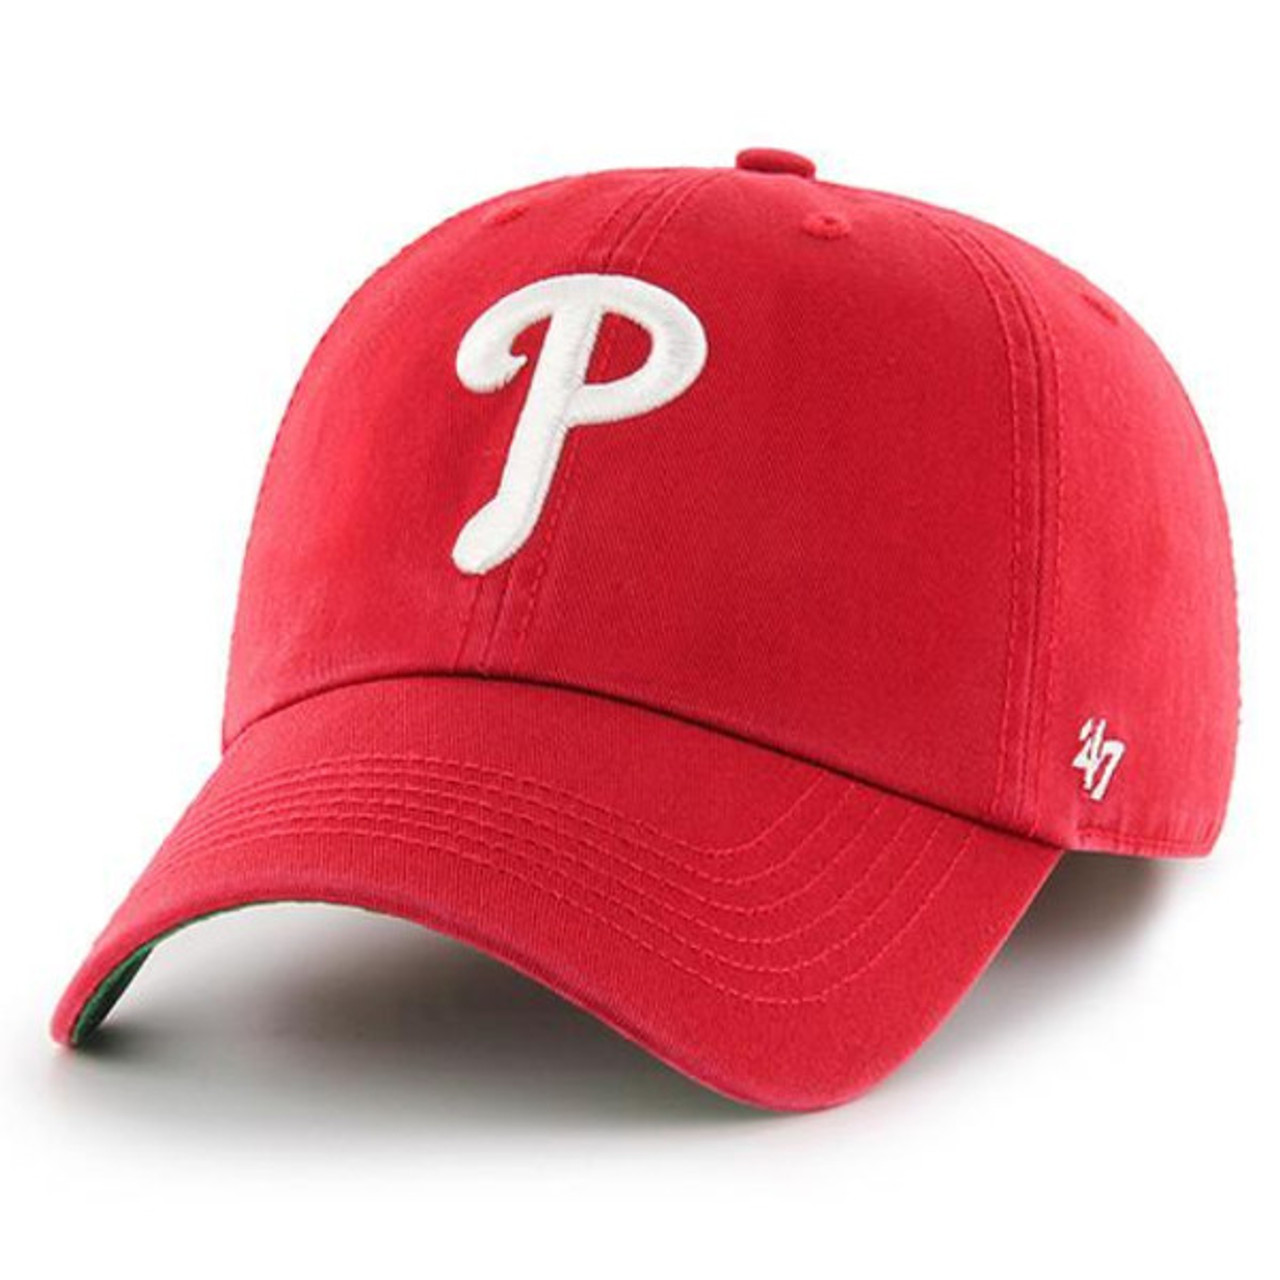 MLB Atlanta Braves Ballpark Cap by 47 Brand